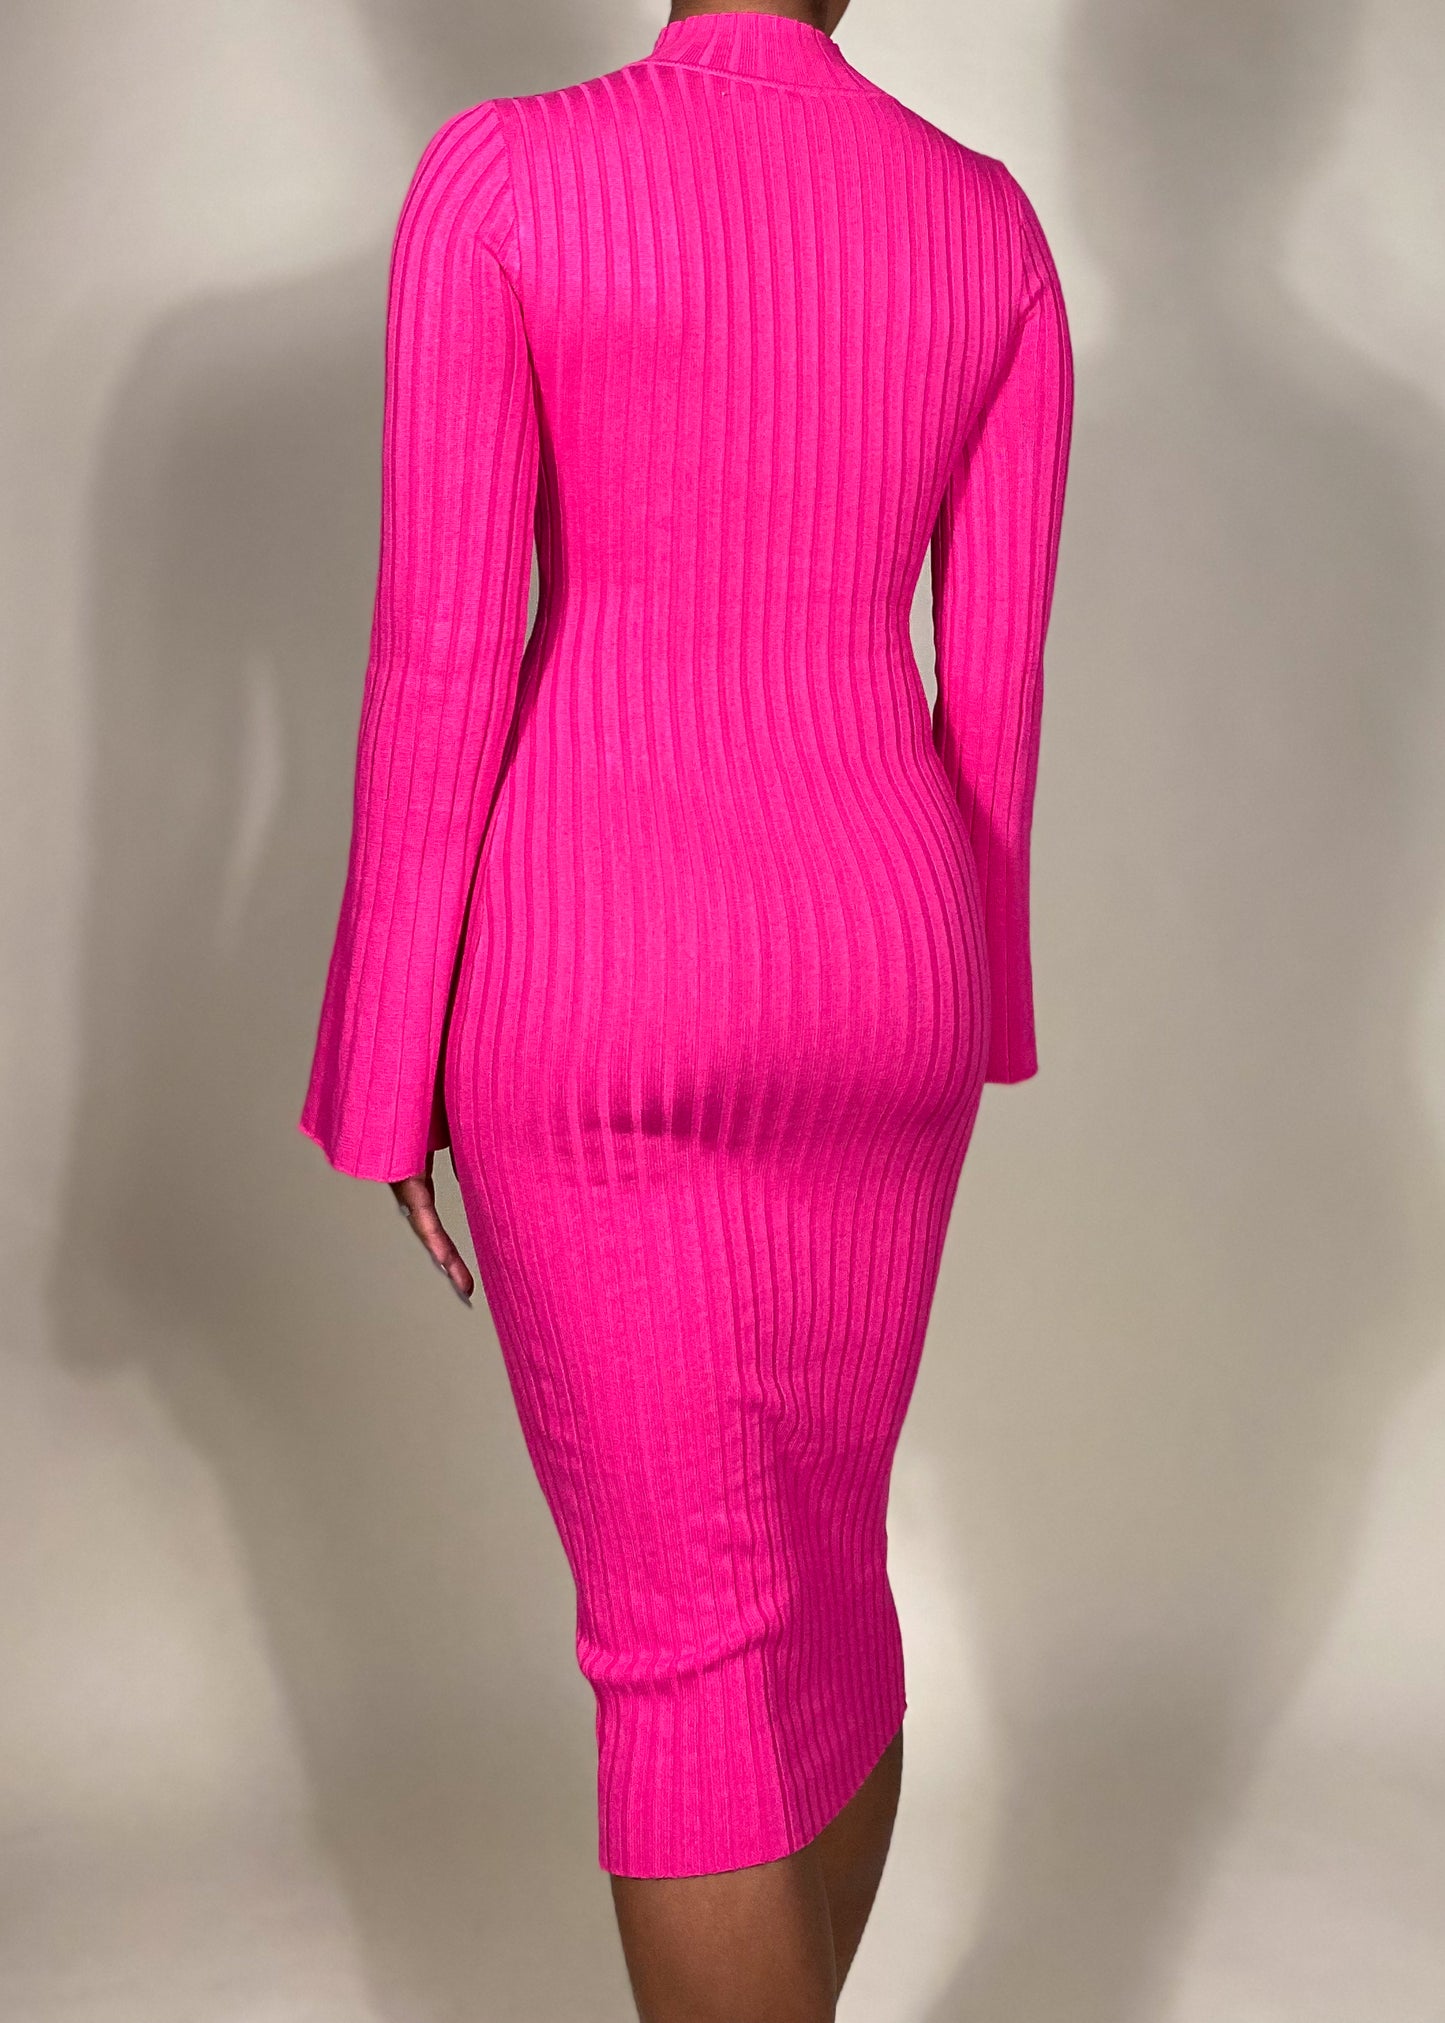 Poppy Pink Sweater Dress